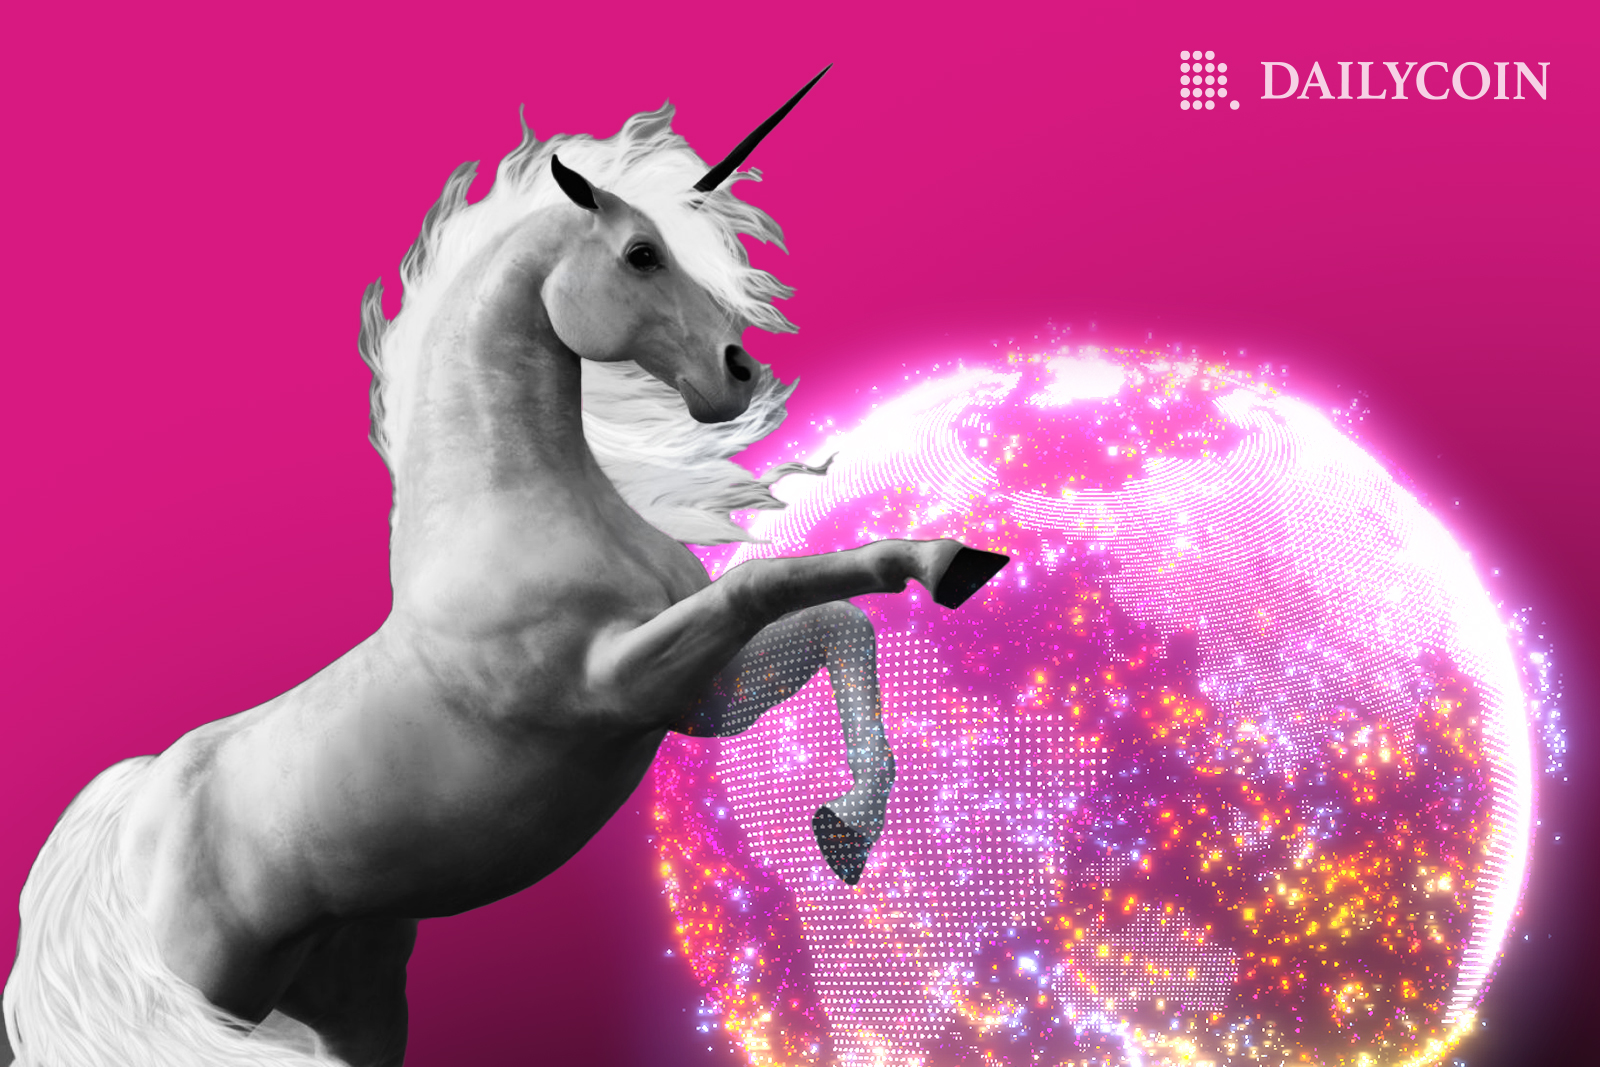 A white unicorn near a pink earth like disco ball